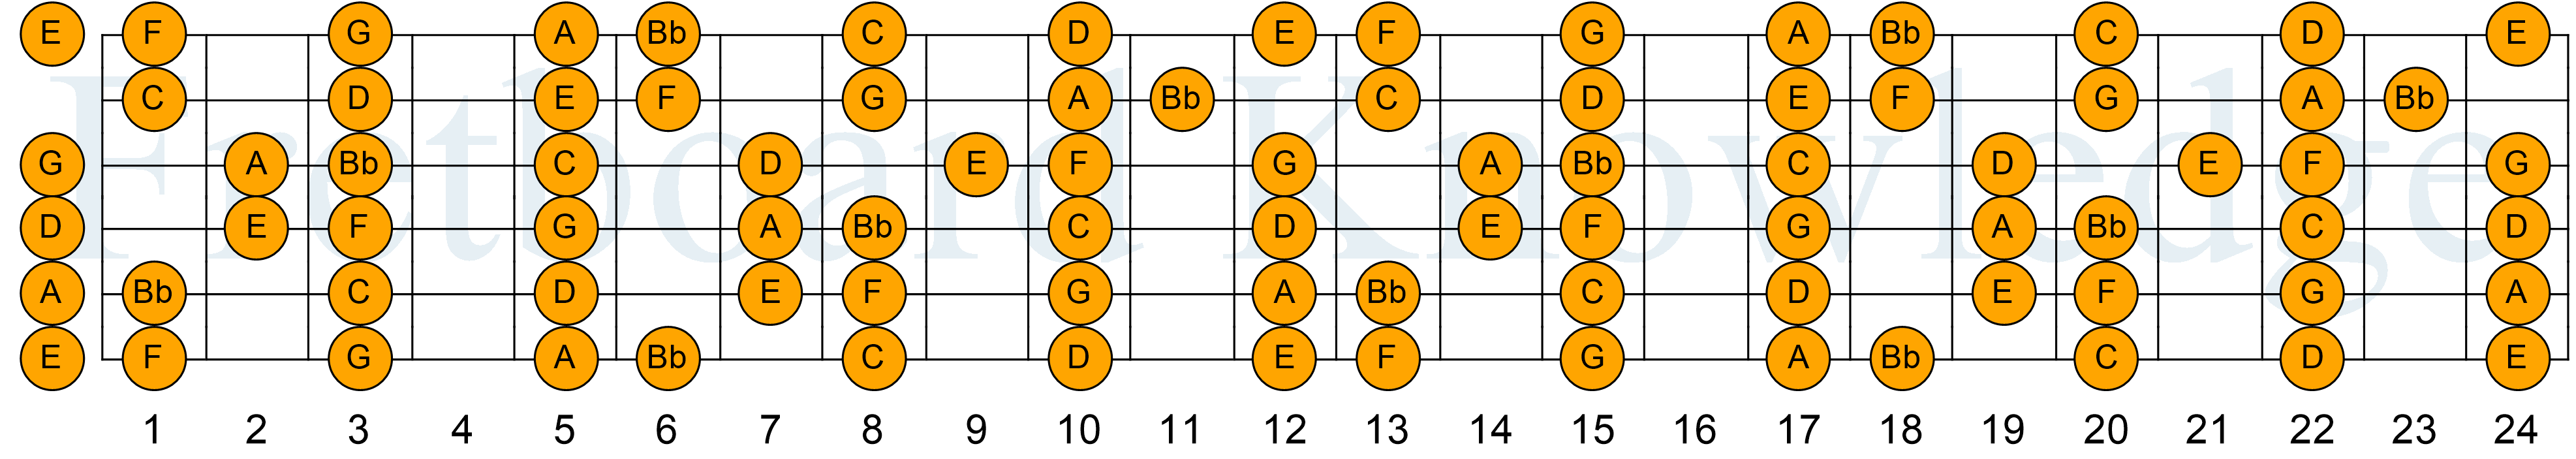 The F Major Scale Guitar Fretboard Diagram